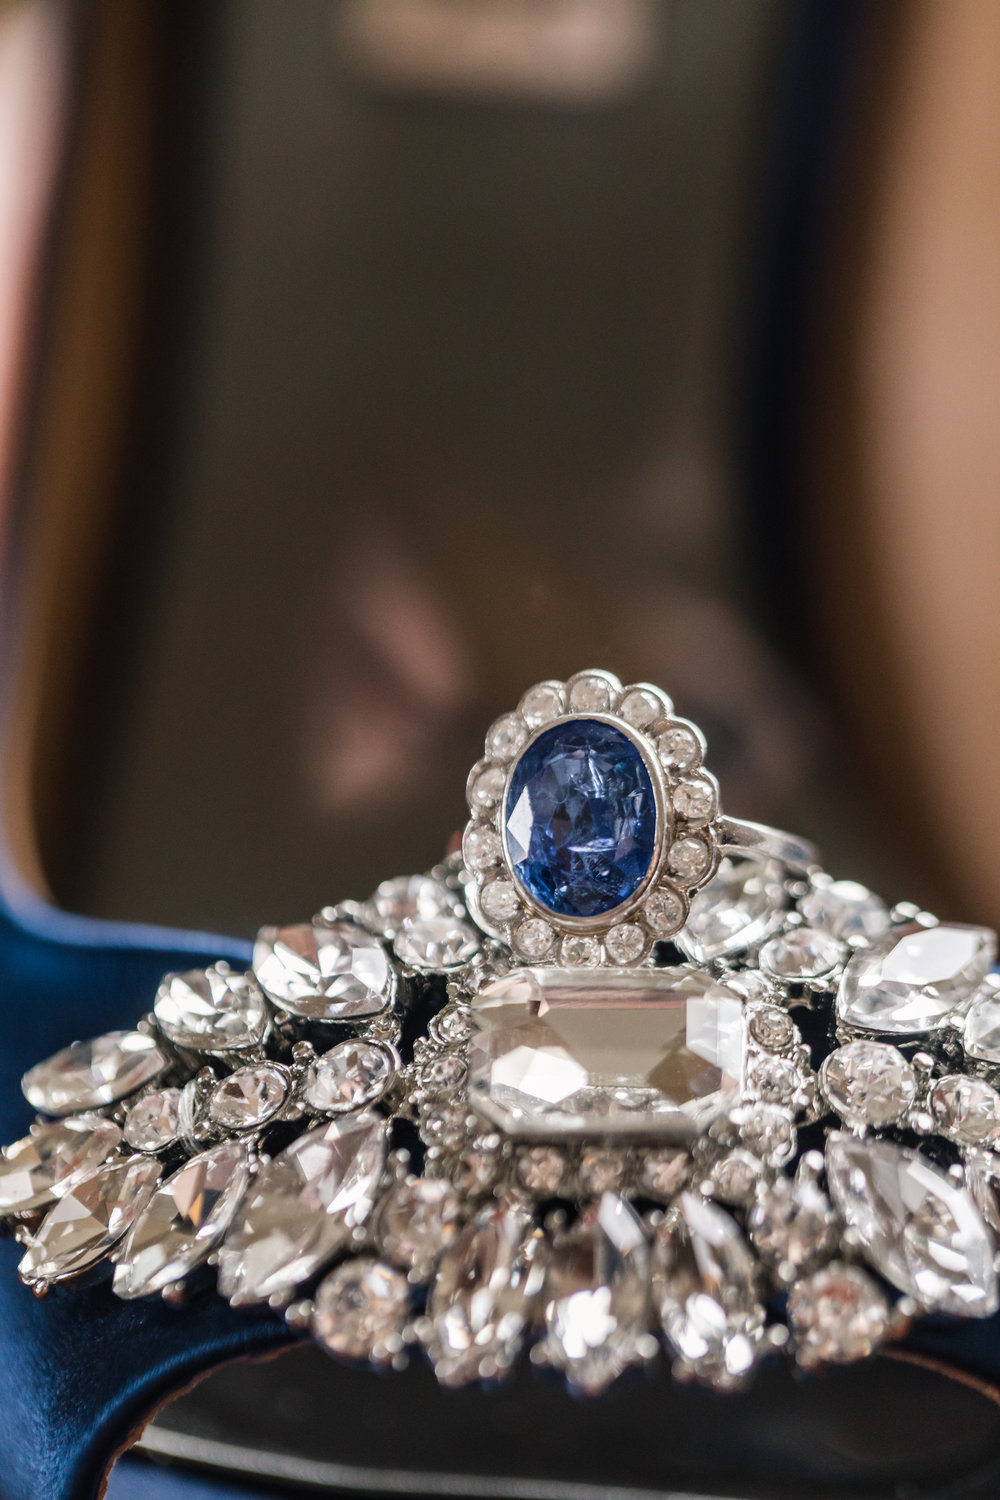 Blue Halo Engagement Ring - A Classic George Washington Hotel Wedding - Photography by Marirosa